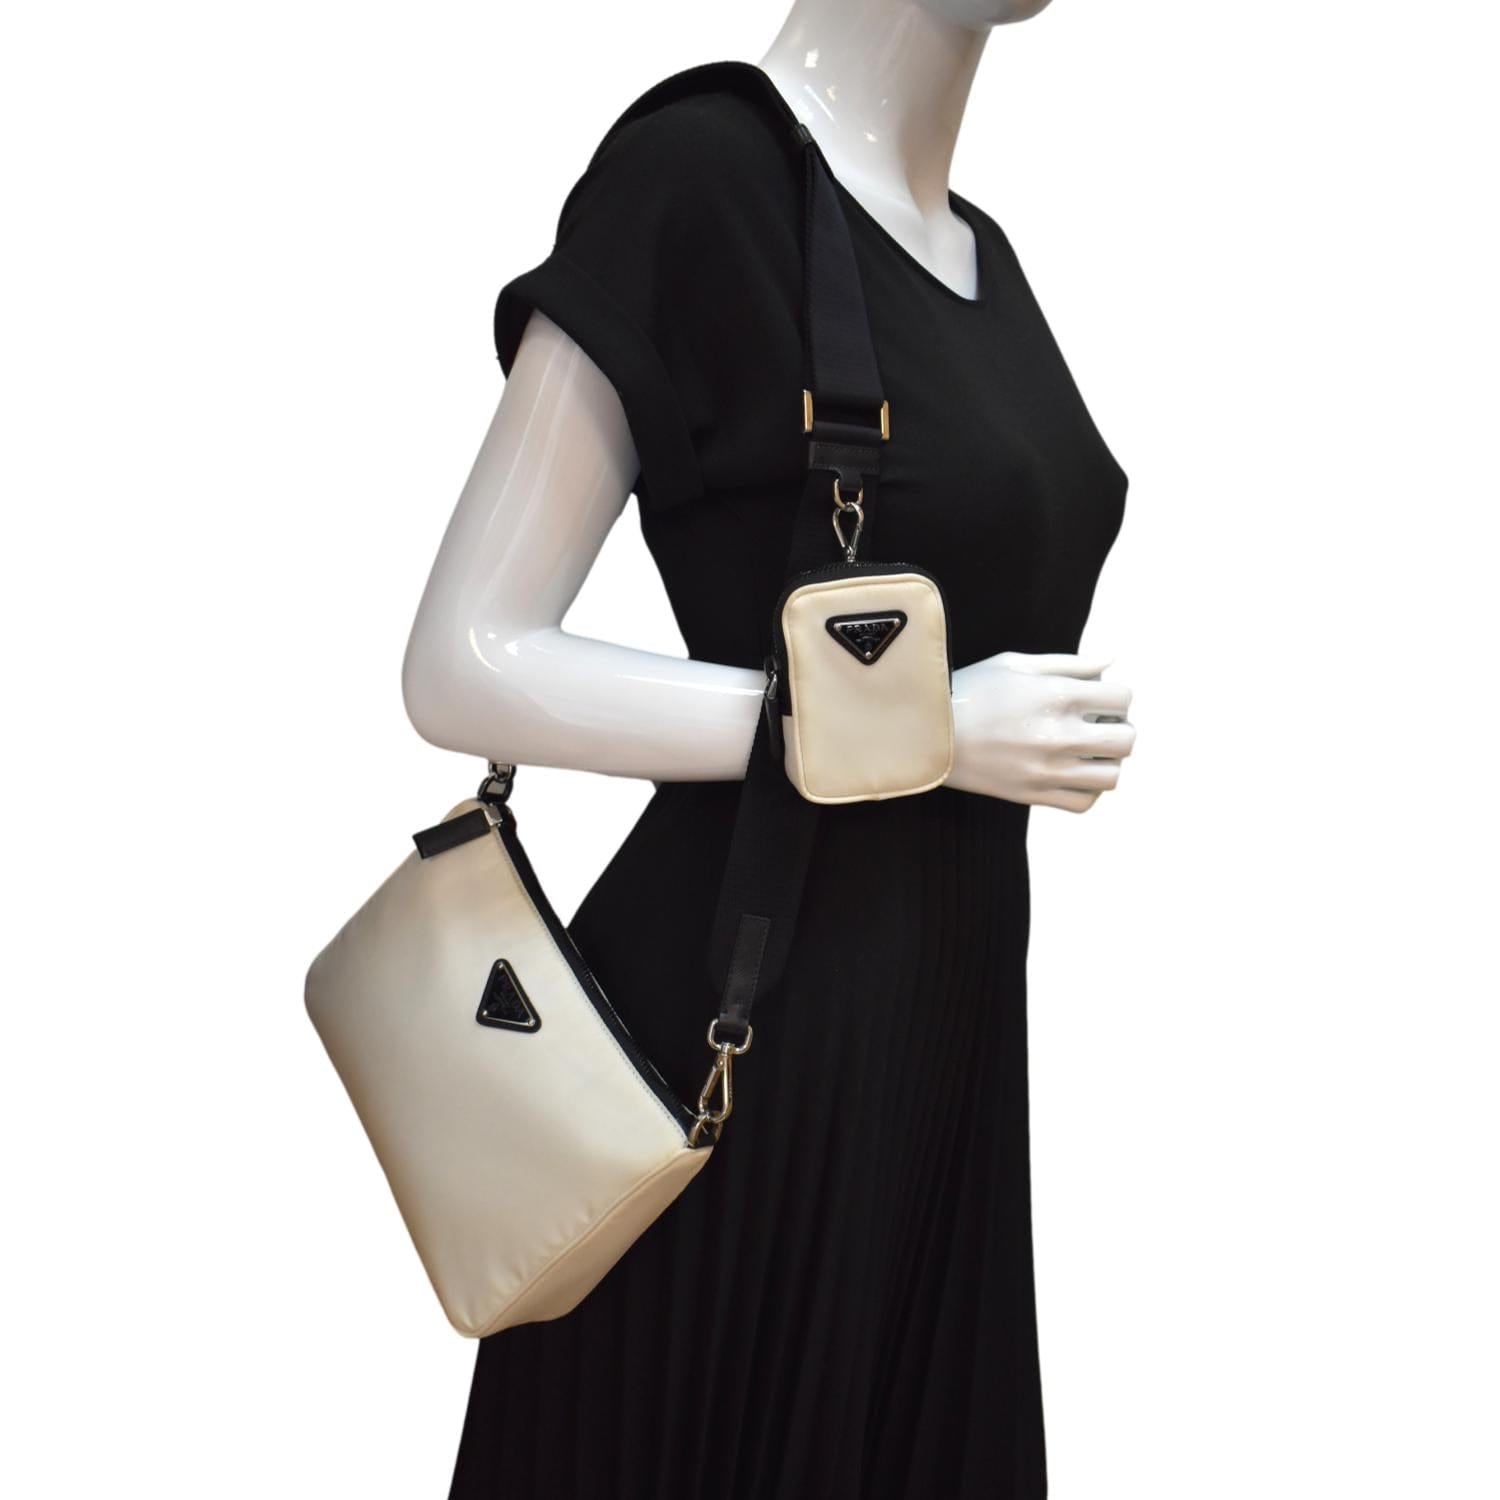 PRADA Women's Shoulder Bags, Authenticity Guaranteed